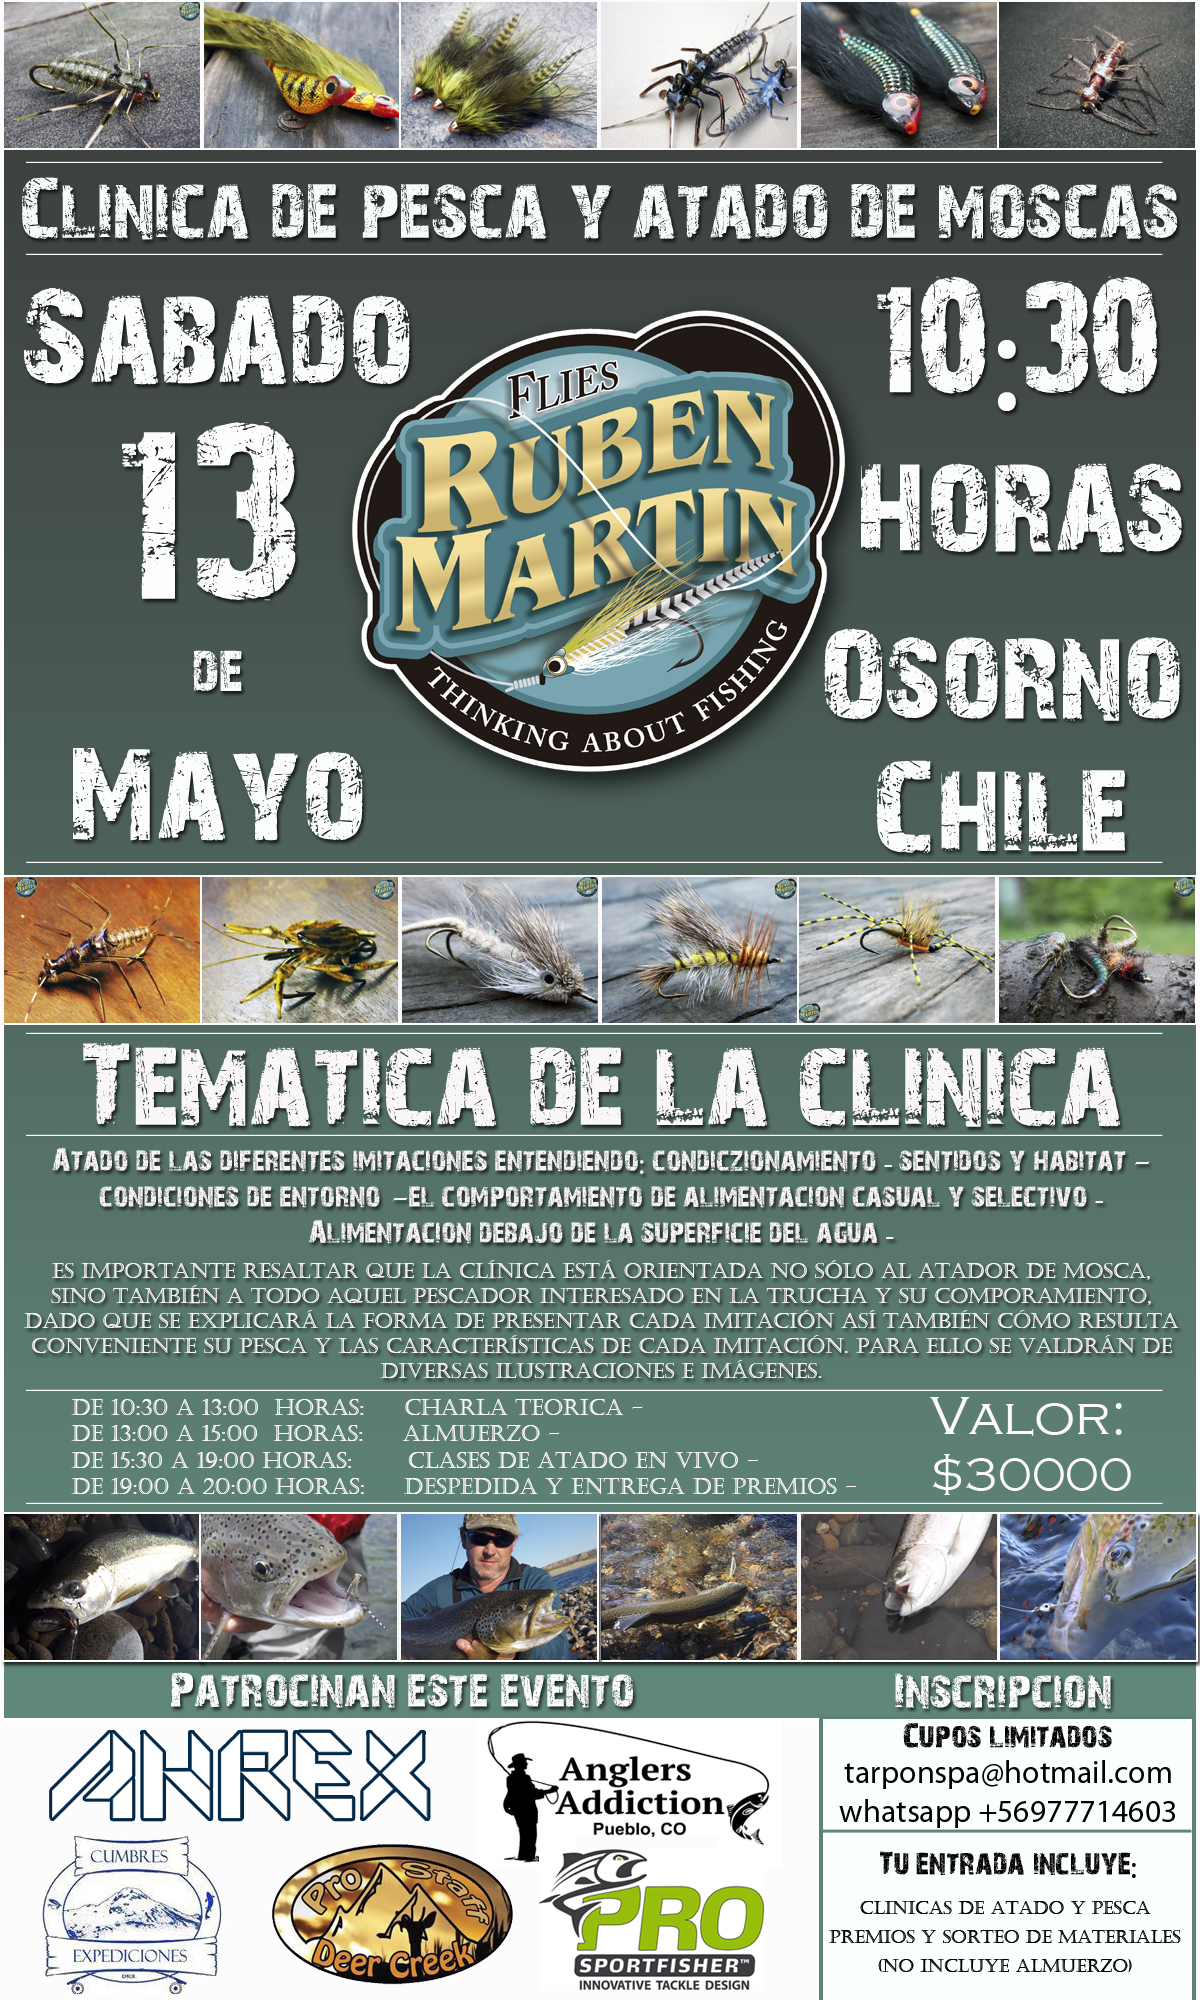 Clinica de atado de moscas en Osorno Chile